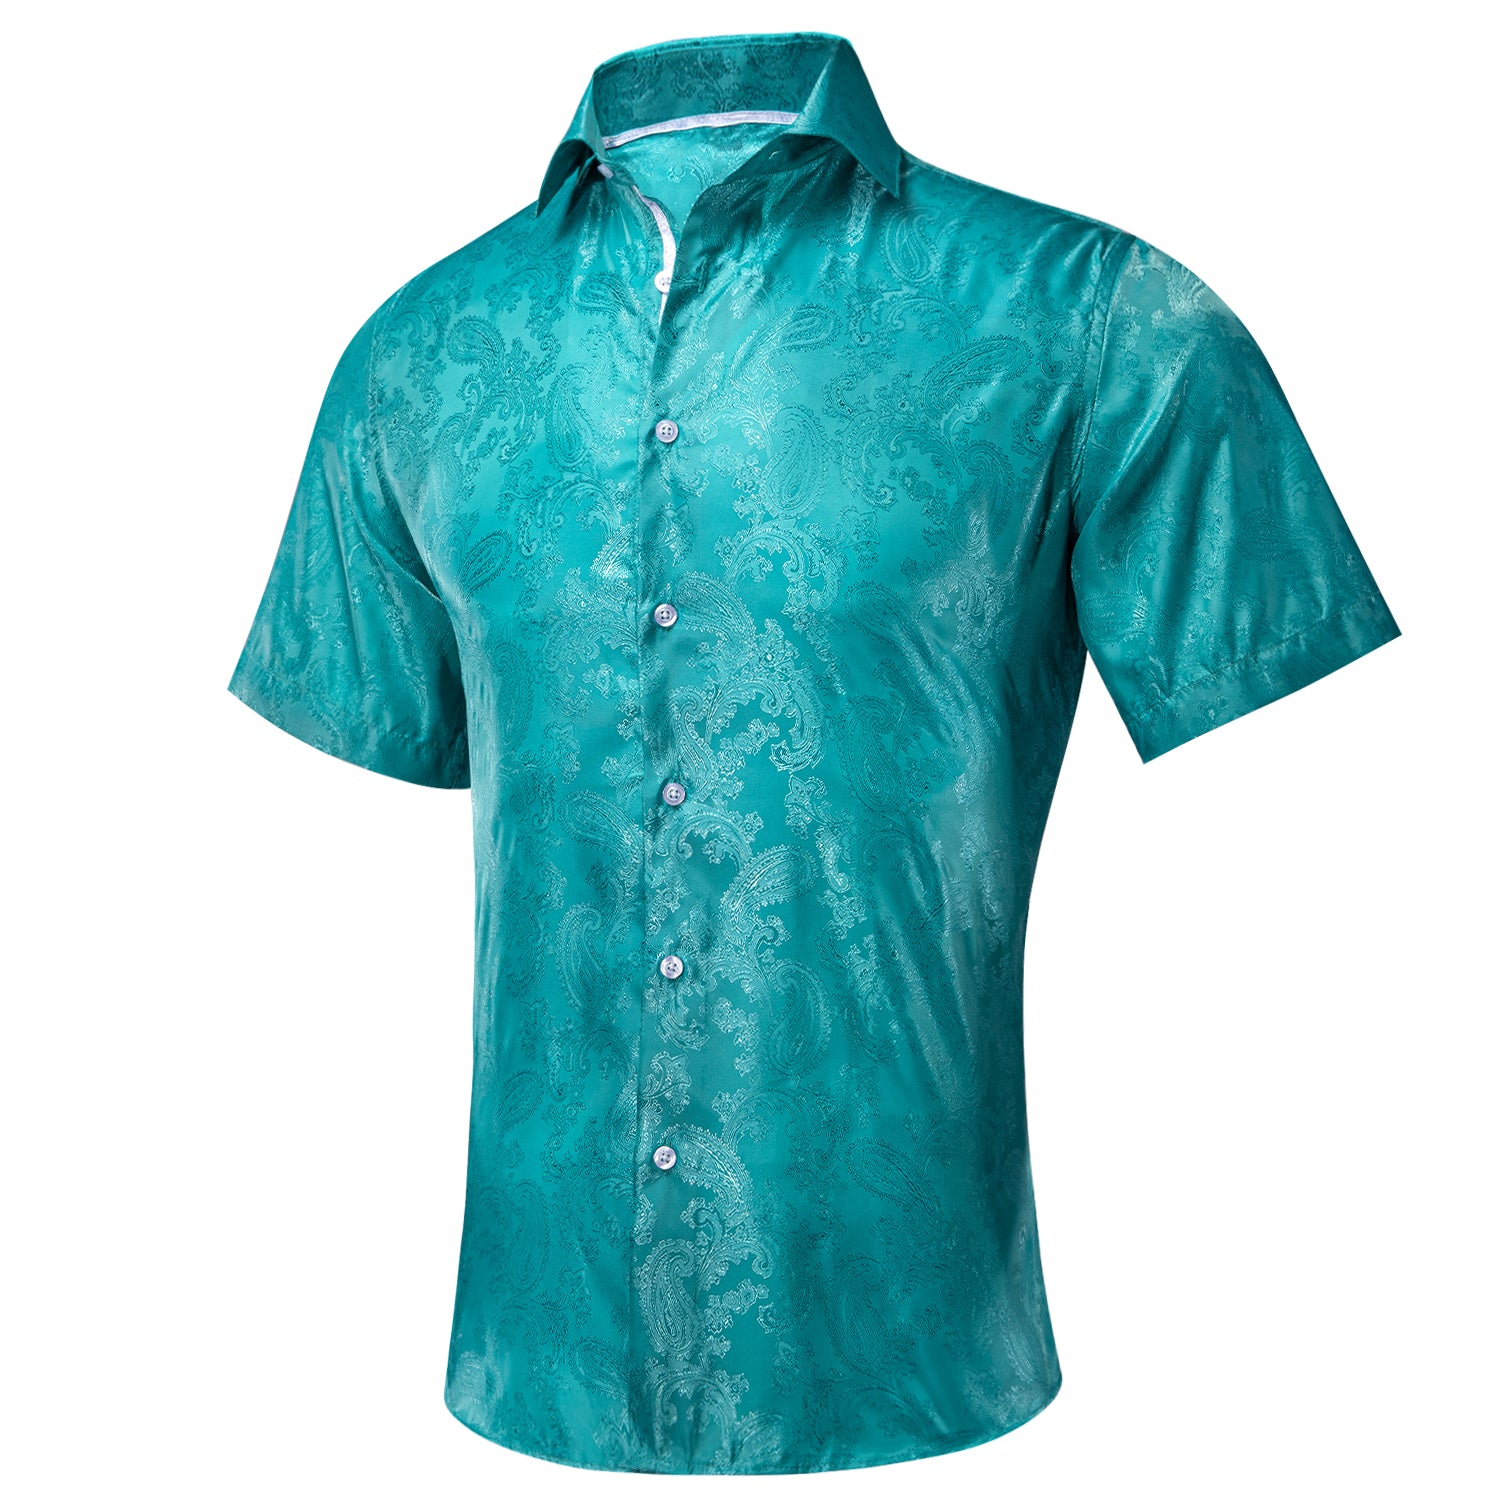 Clearance Sale Teal Green Paisley Silk Men's Short Sleeve Shirt